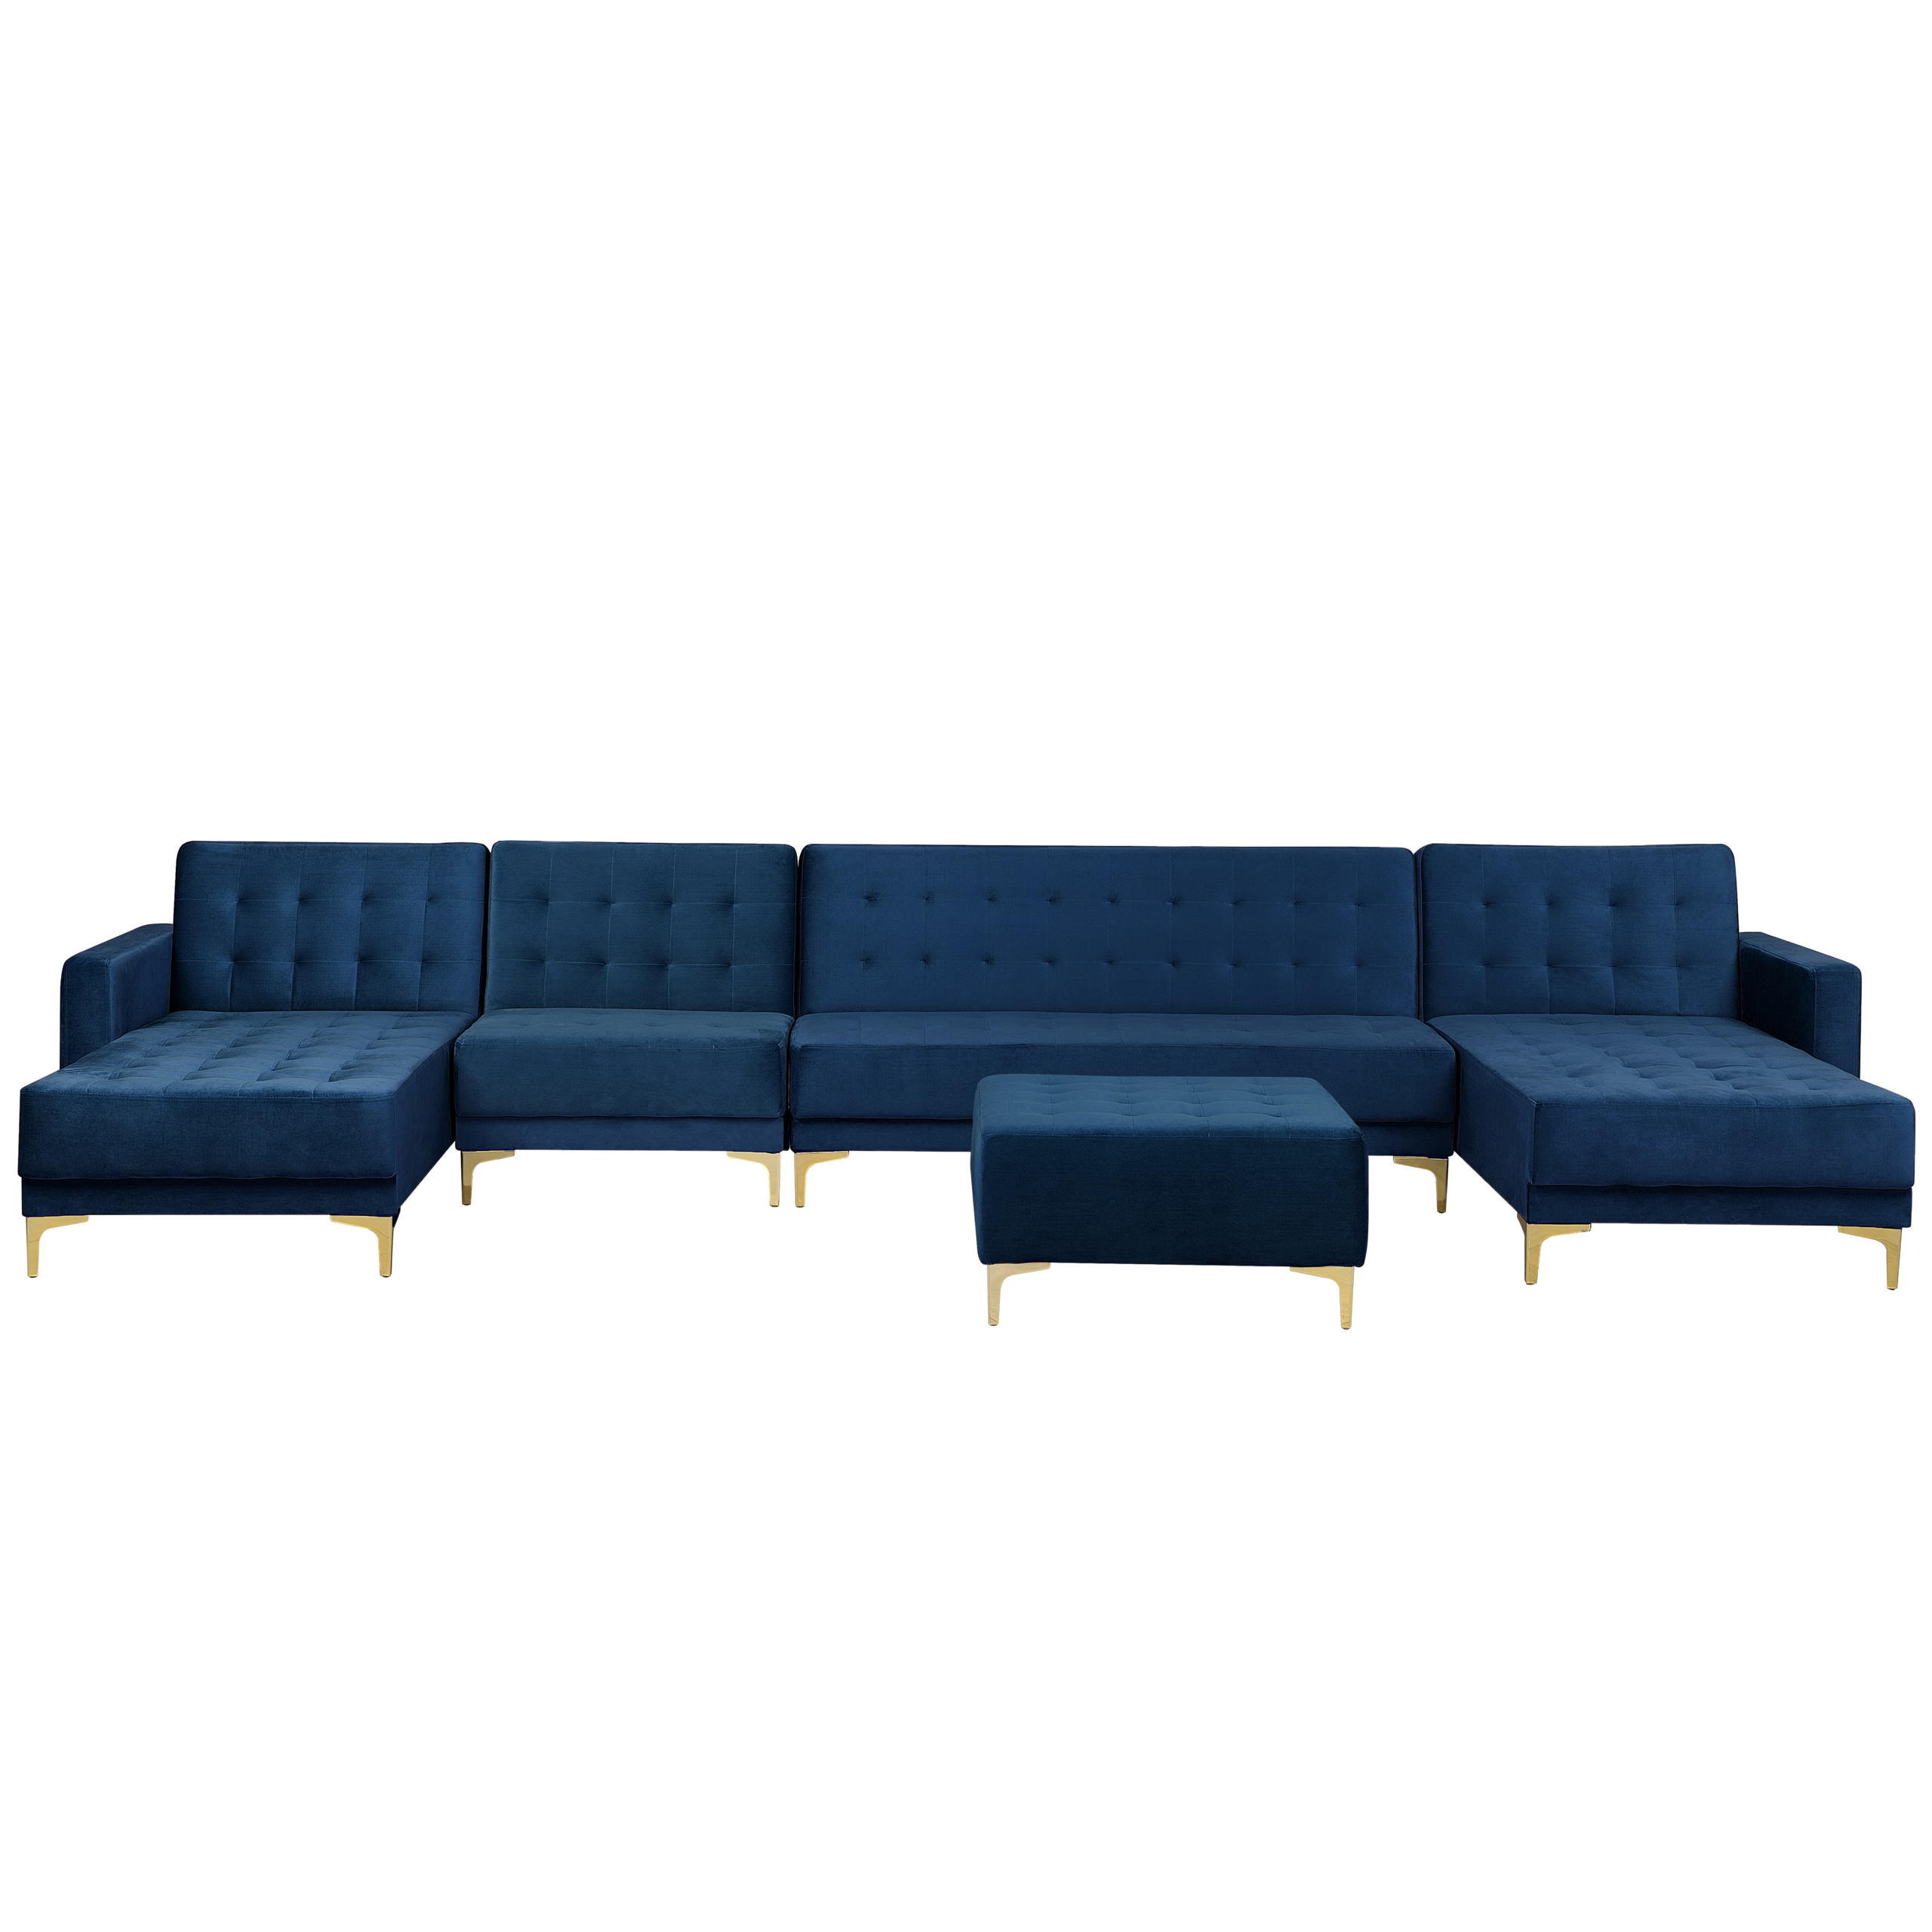 Beliani Corner Sofa Bed Navy Blue Velvet Tufted Fabric Modern U-Shaped Modular 6 Seater with Ottoman Chaise Longues